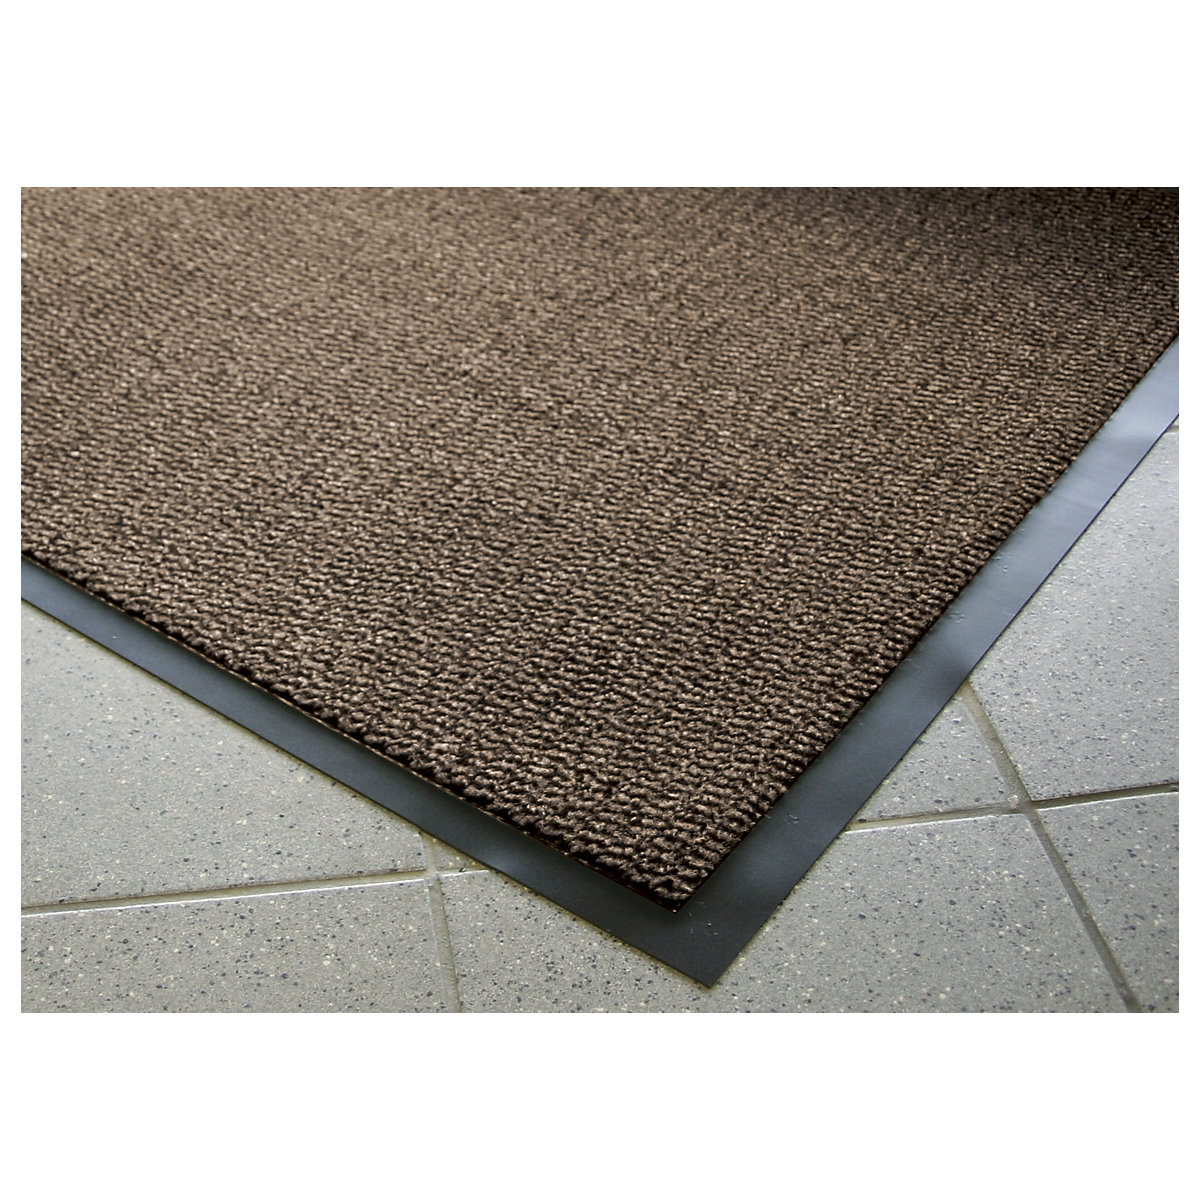 Entrance matting for indoor use, polypropylene pile, LxW 1500 x 900 mm, black / brown